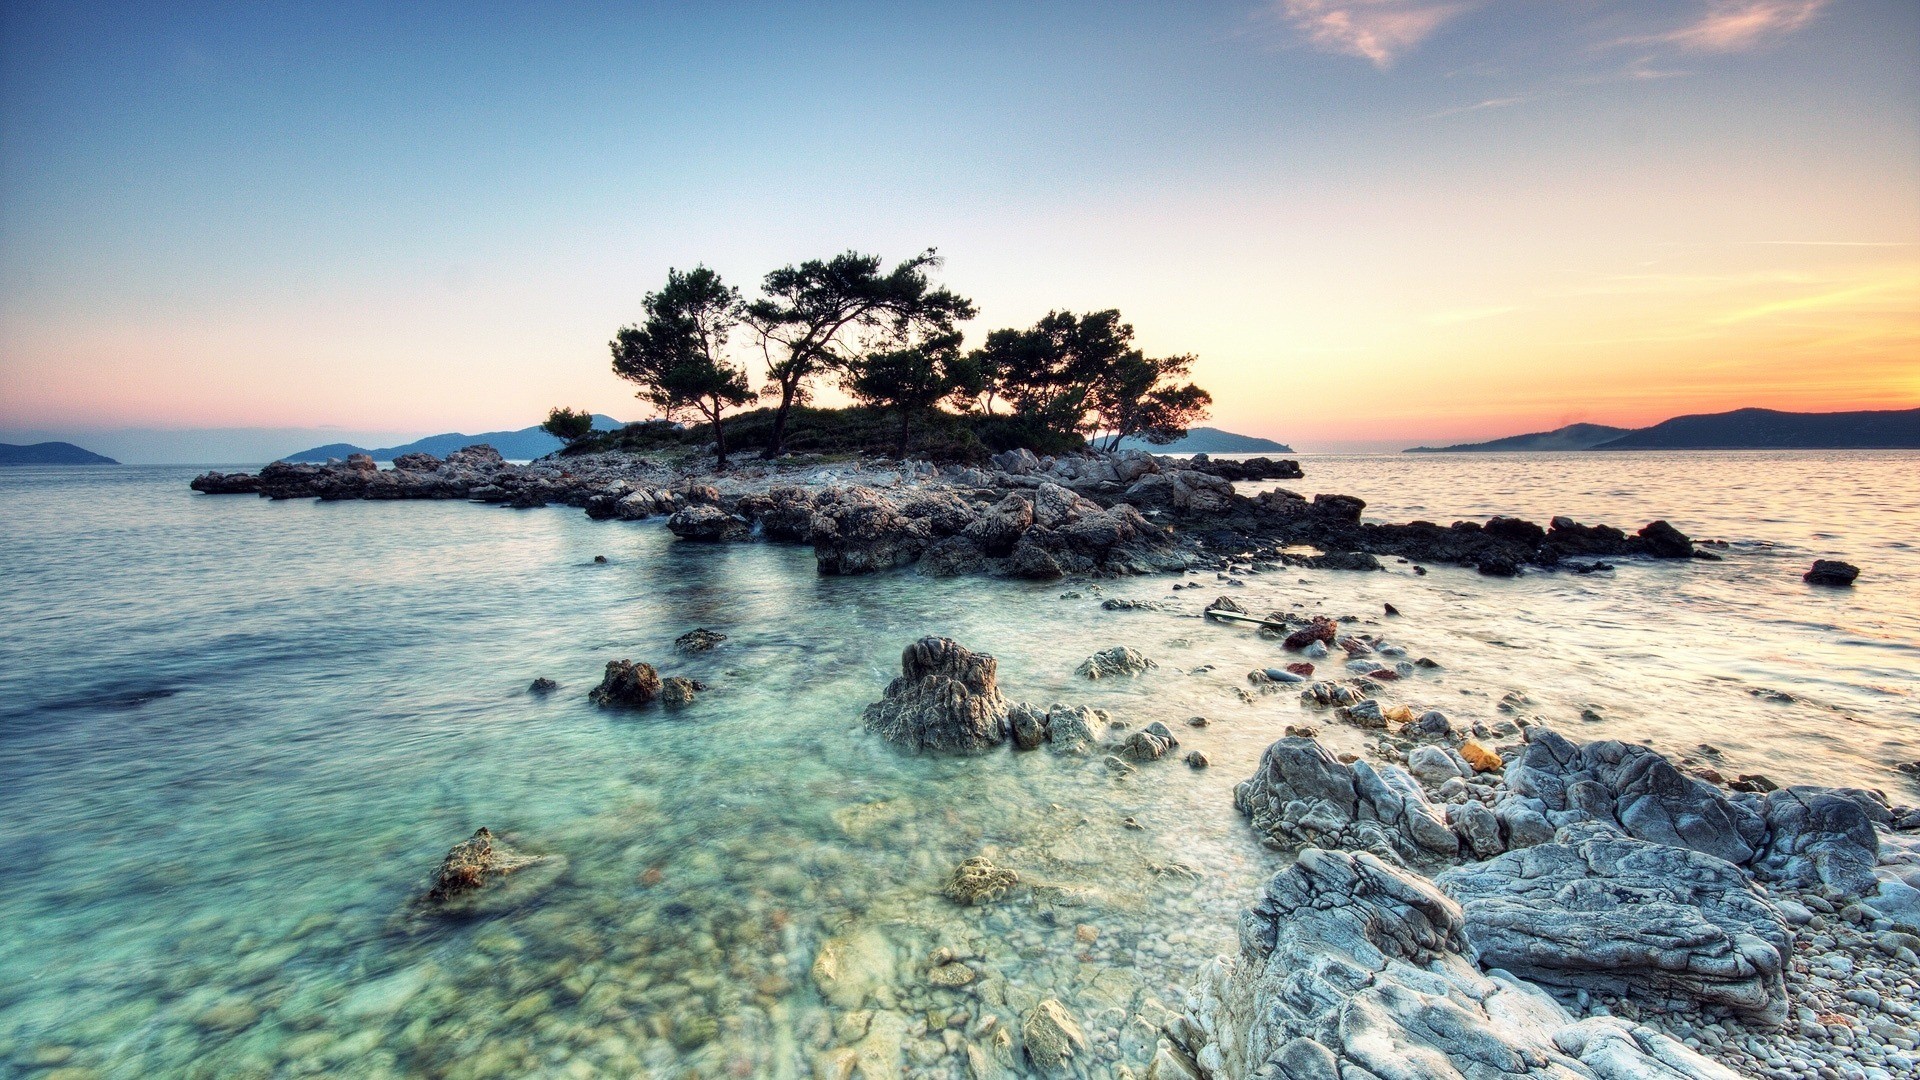 General 1920x1080 nature HDR beach landscape sea island rocks sky water trees Croatia